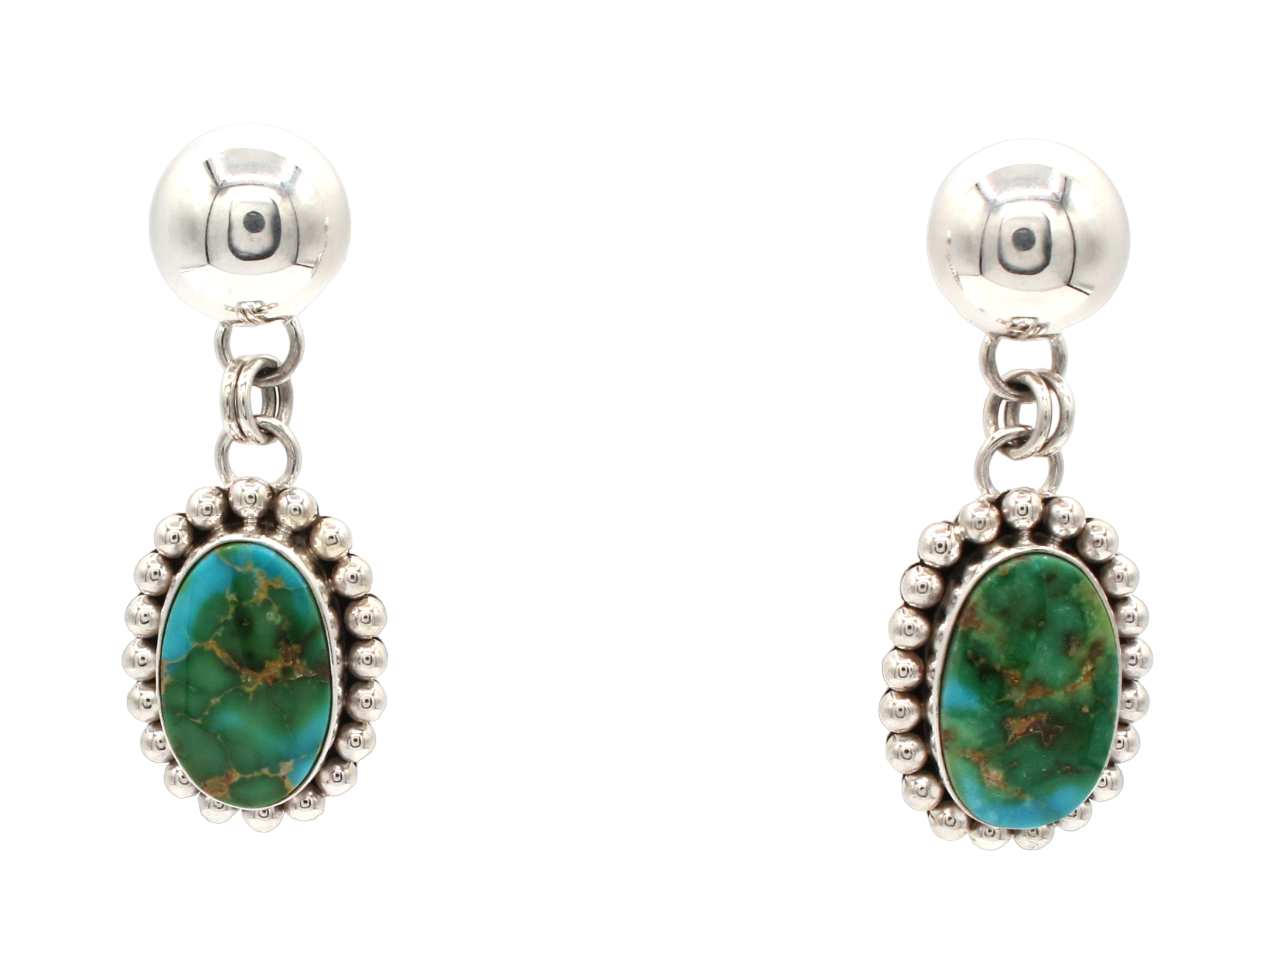 Sonoran Gold Turquoise Dangle Earrings-Jewelry-Artie Yellowhorse-Sorrel Sky Gallery